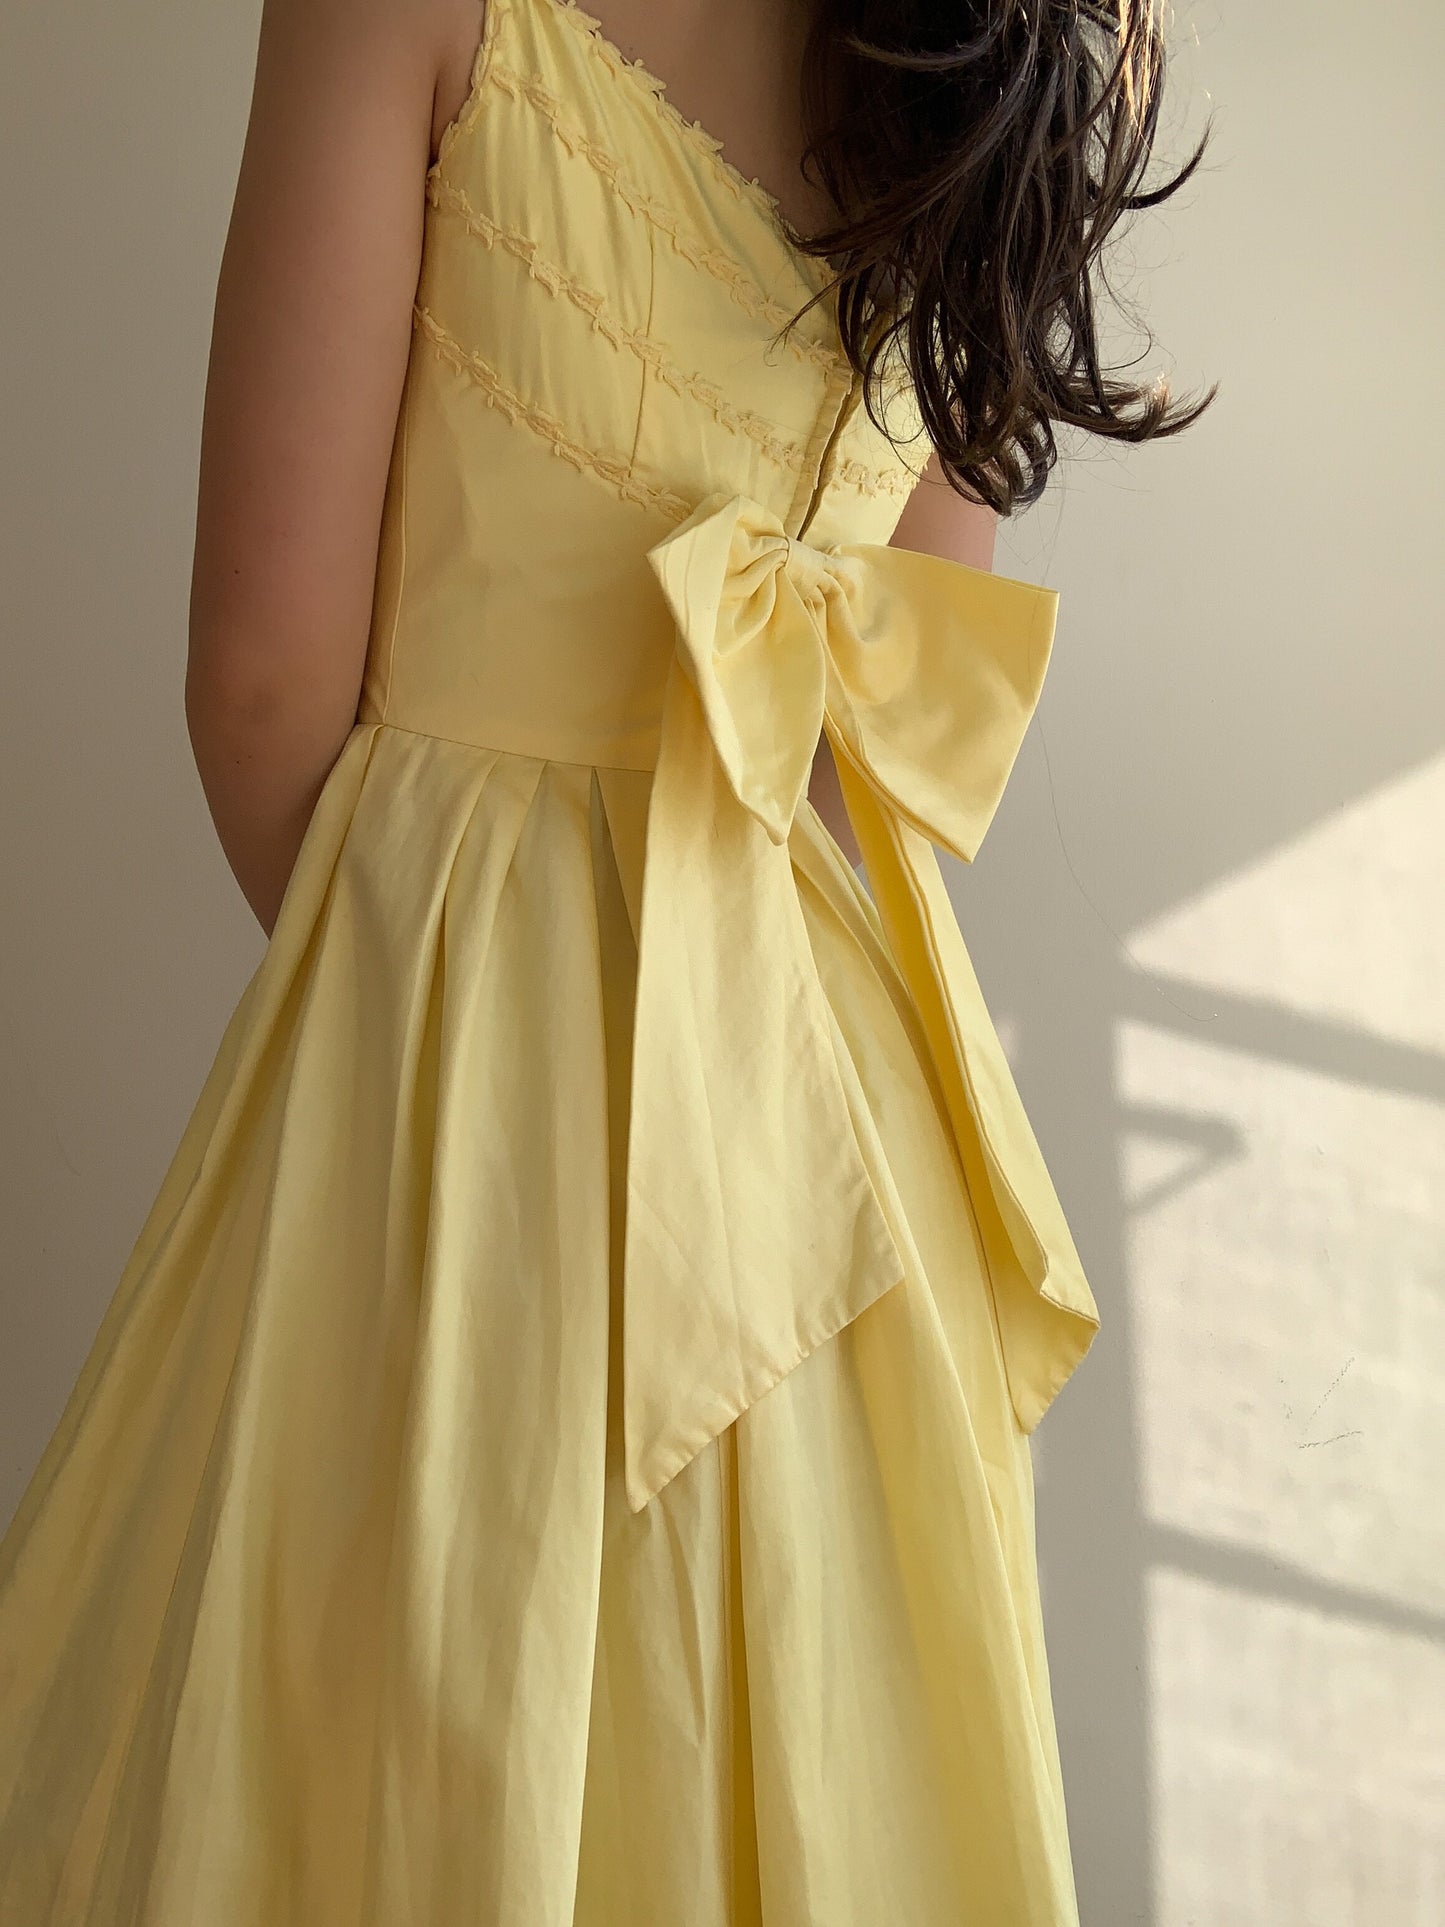 1950s Sunshine Dress (XS/S)